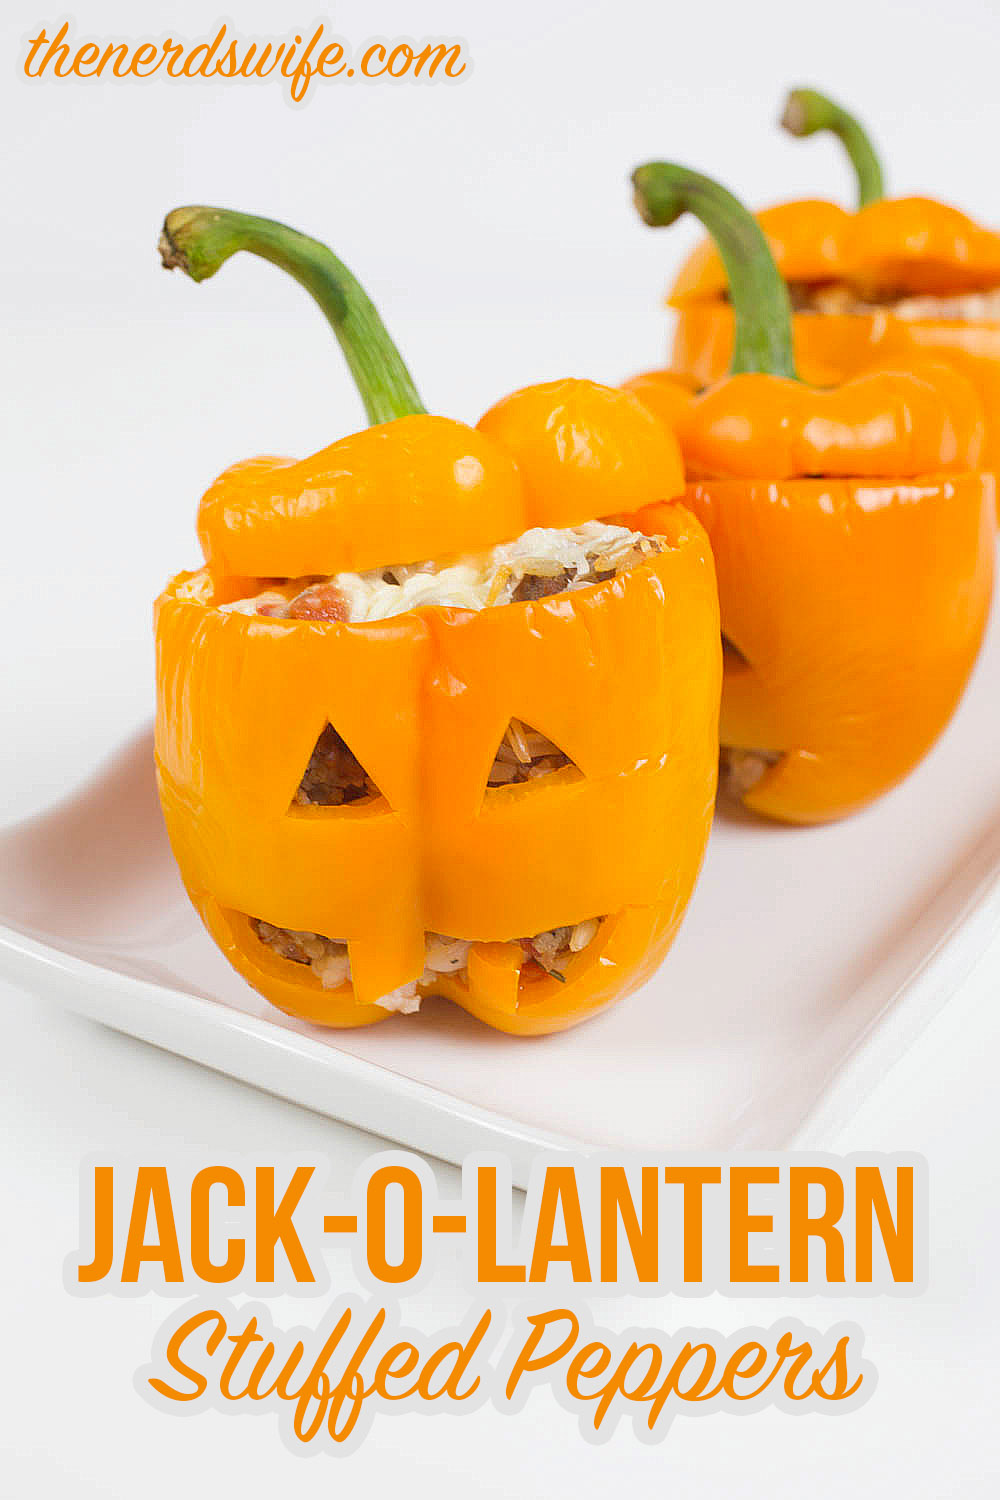 Jack-o-Lantern Stuffed Peppers for Halloween - The Nerd's Wife